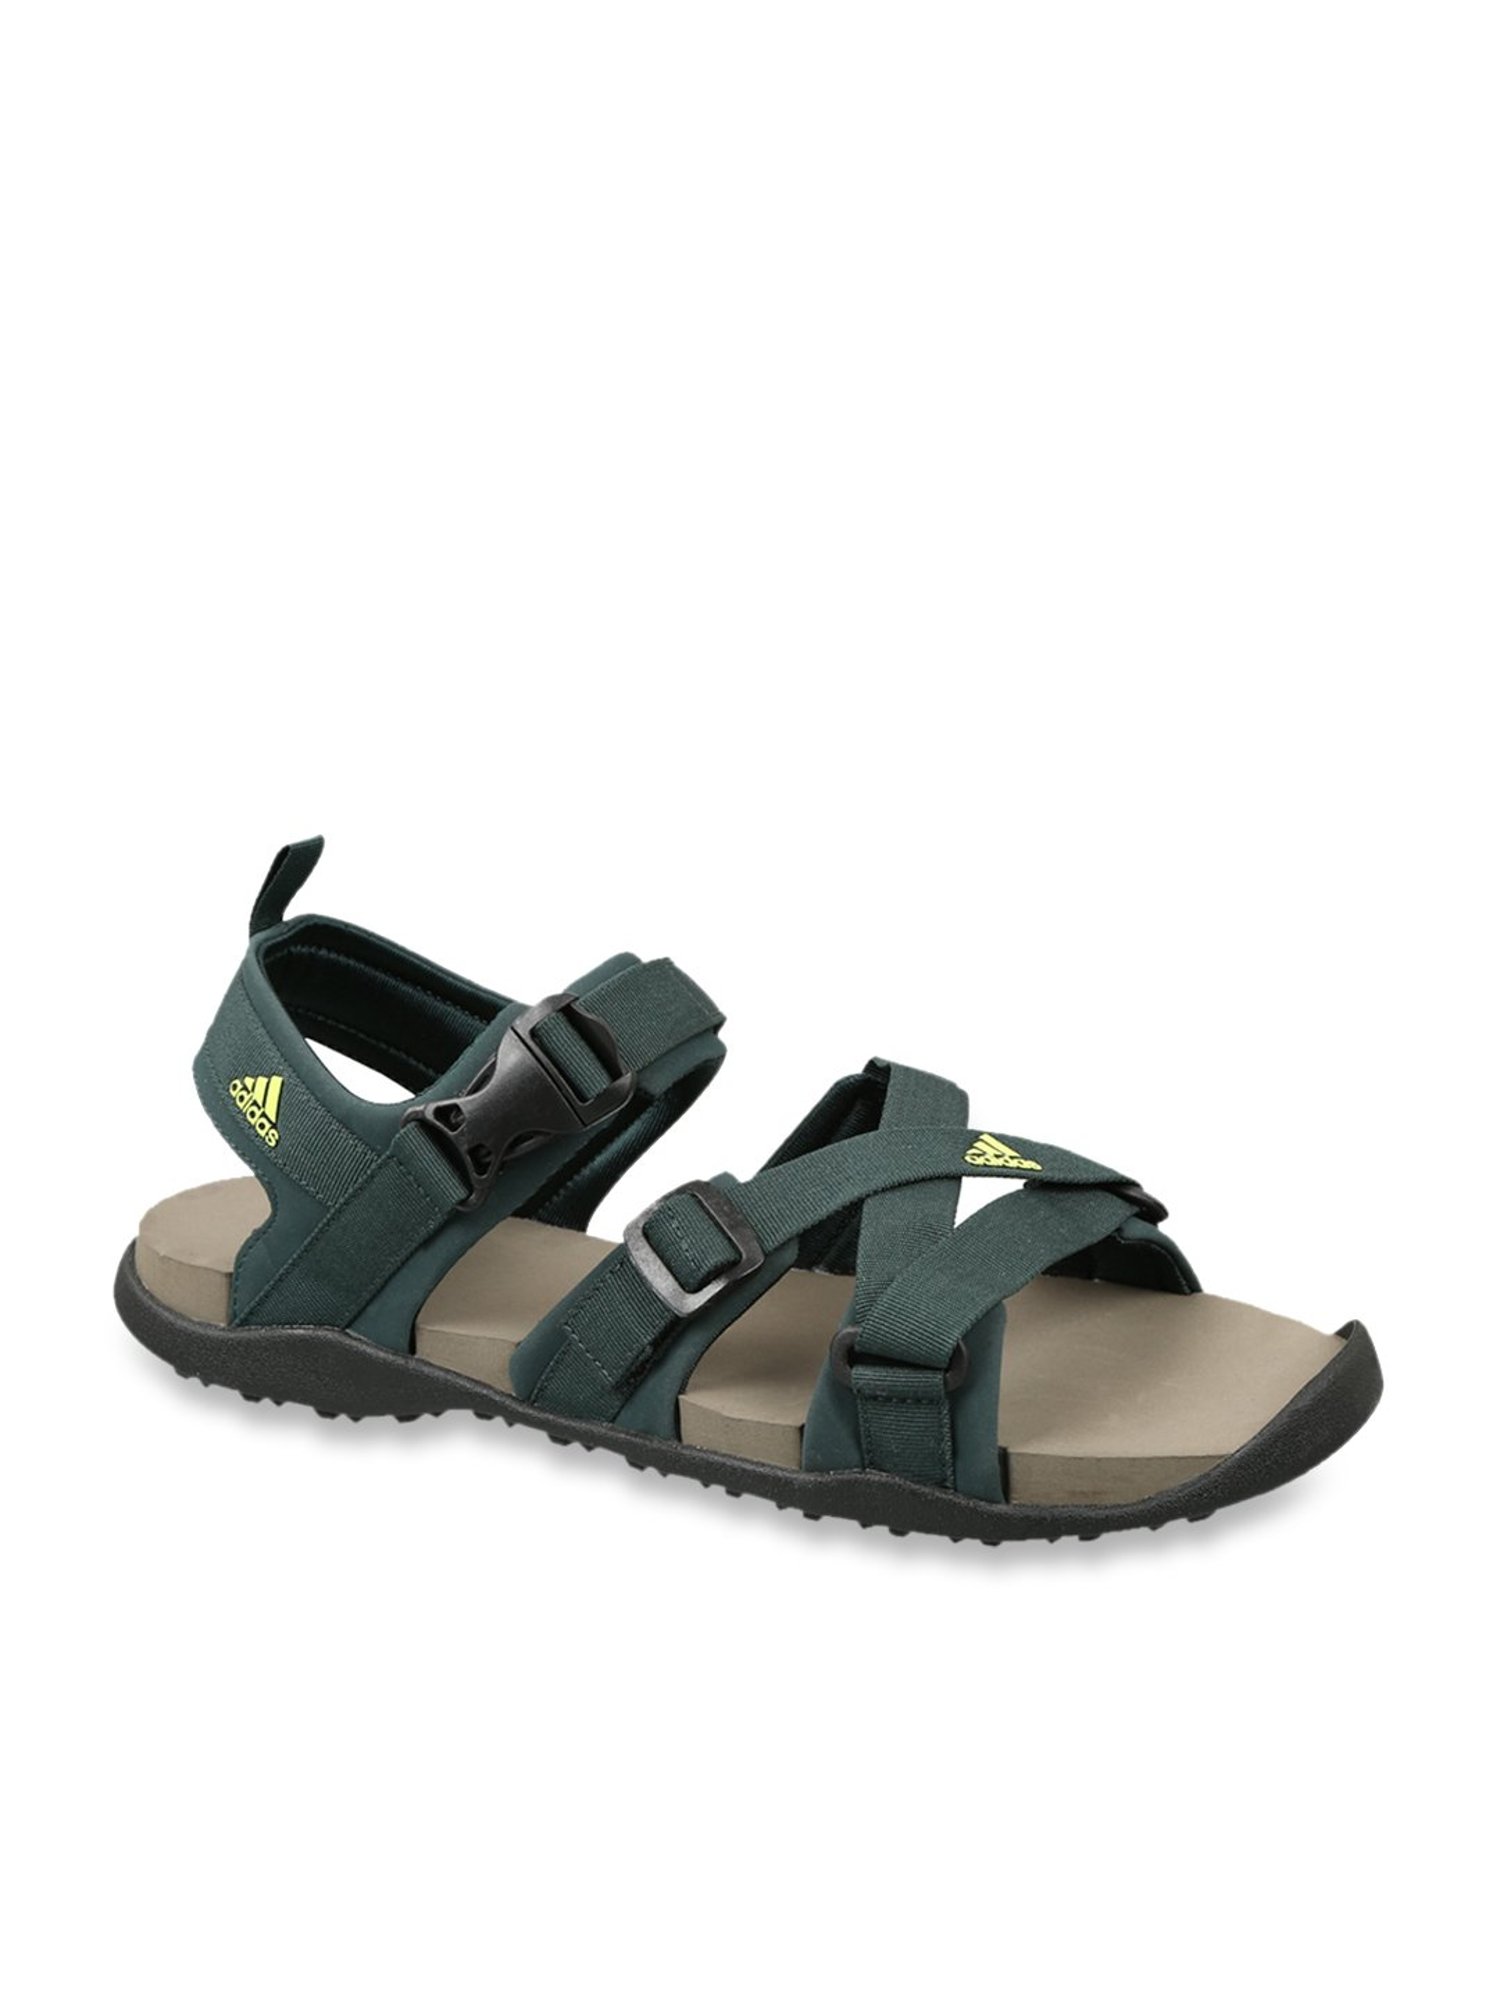 Adidas Men's ADISSEY M CBLACK/ACTGOL Sport Sandal-9 Kids UK (GC0774) :  Amazon.in: Fashion